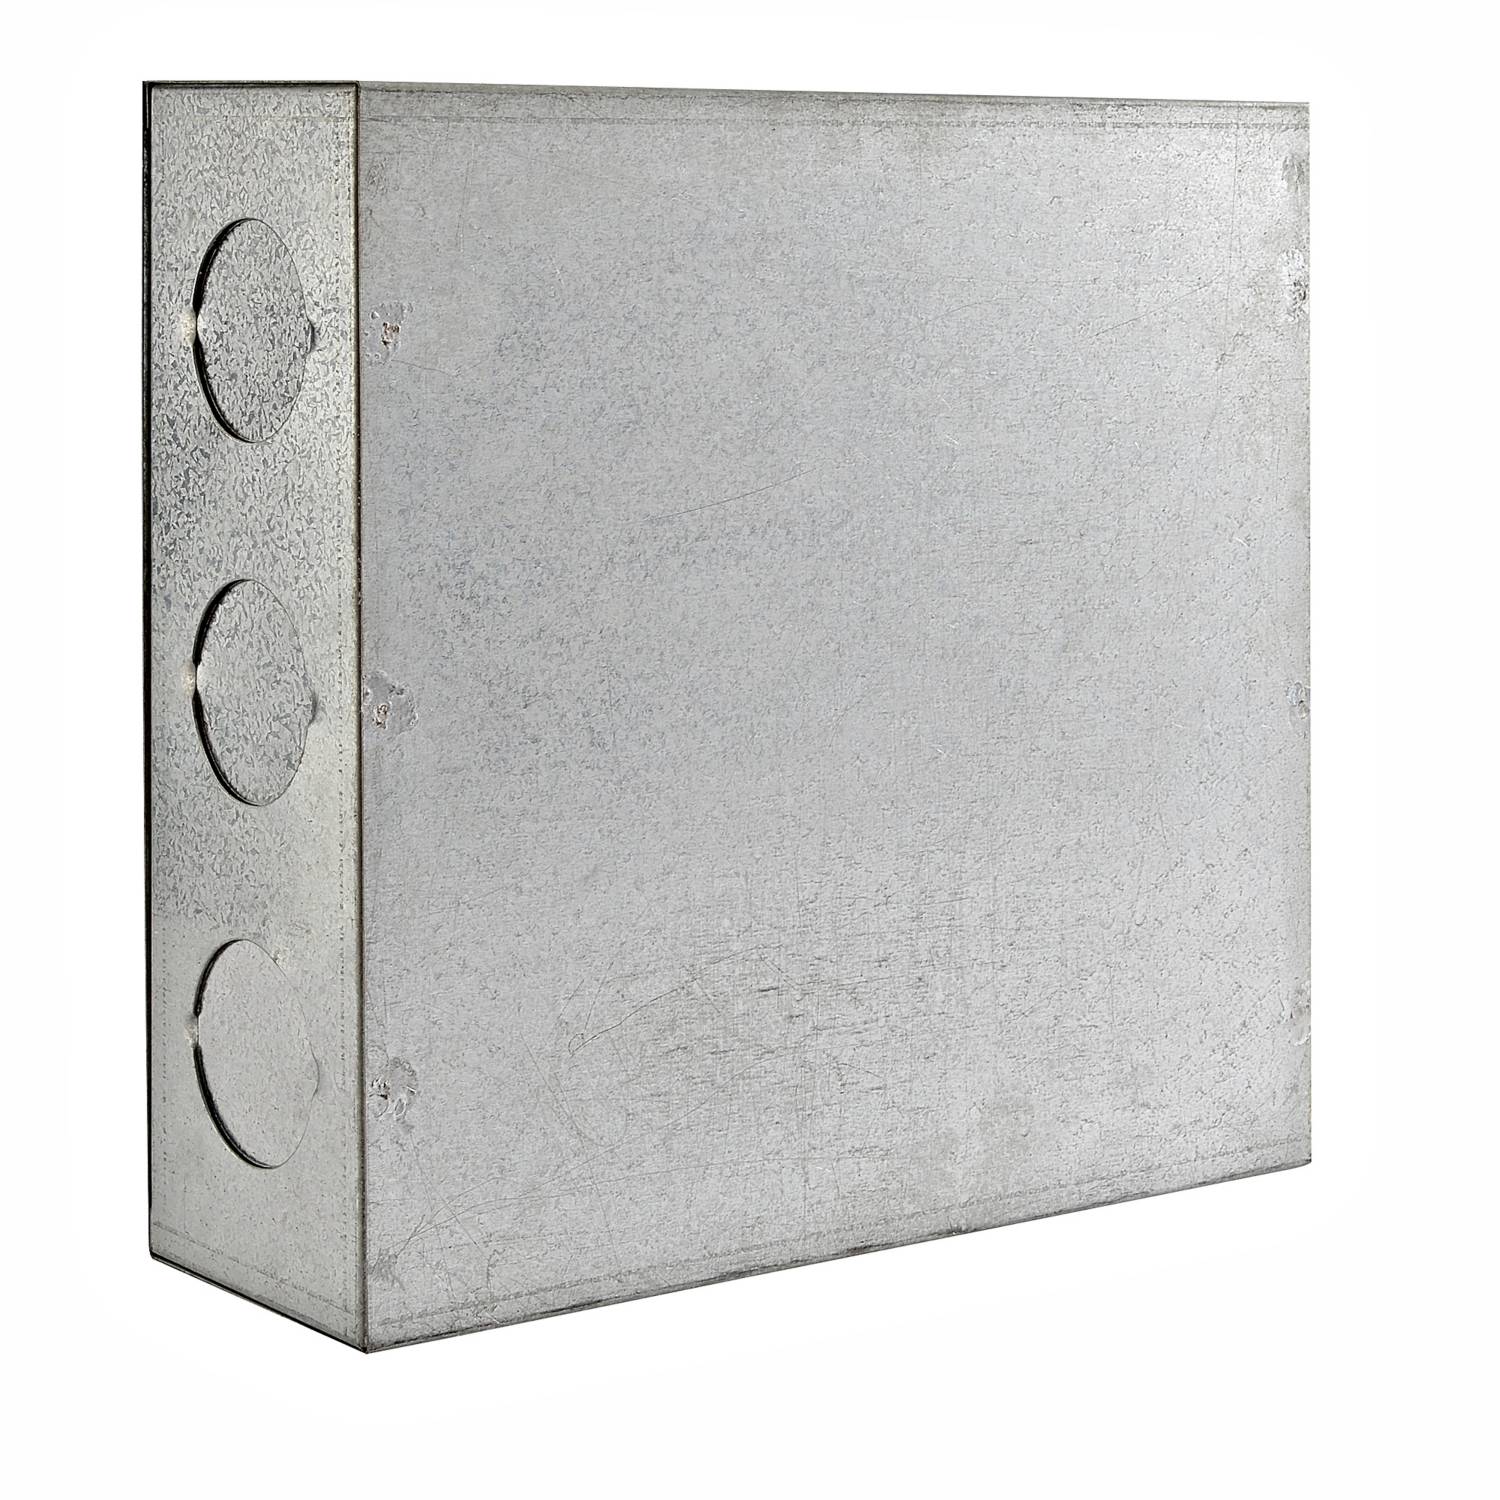 Caja pase metalica pesada de 4 x 4 x 2